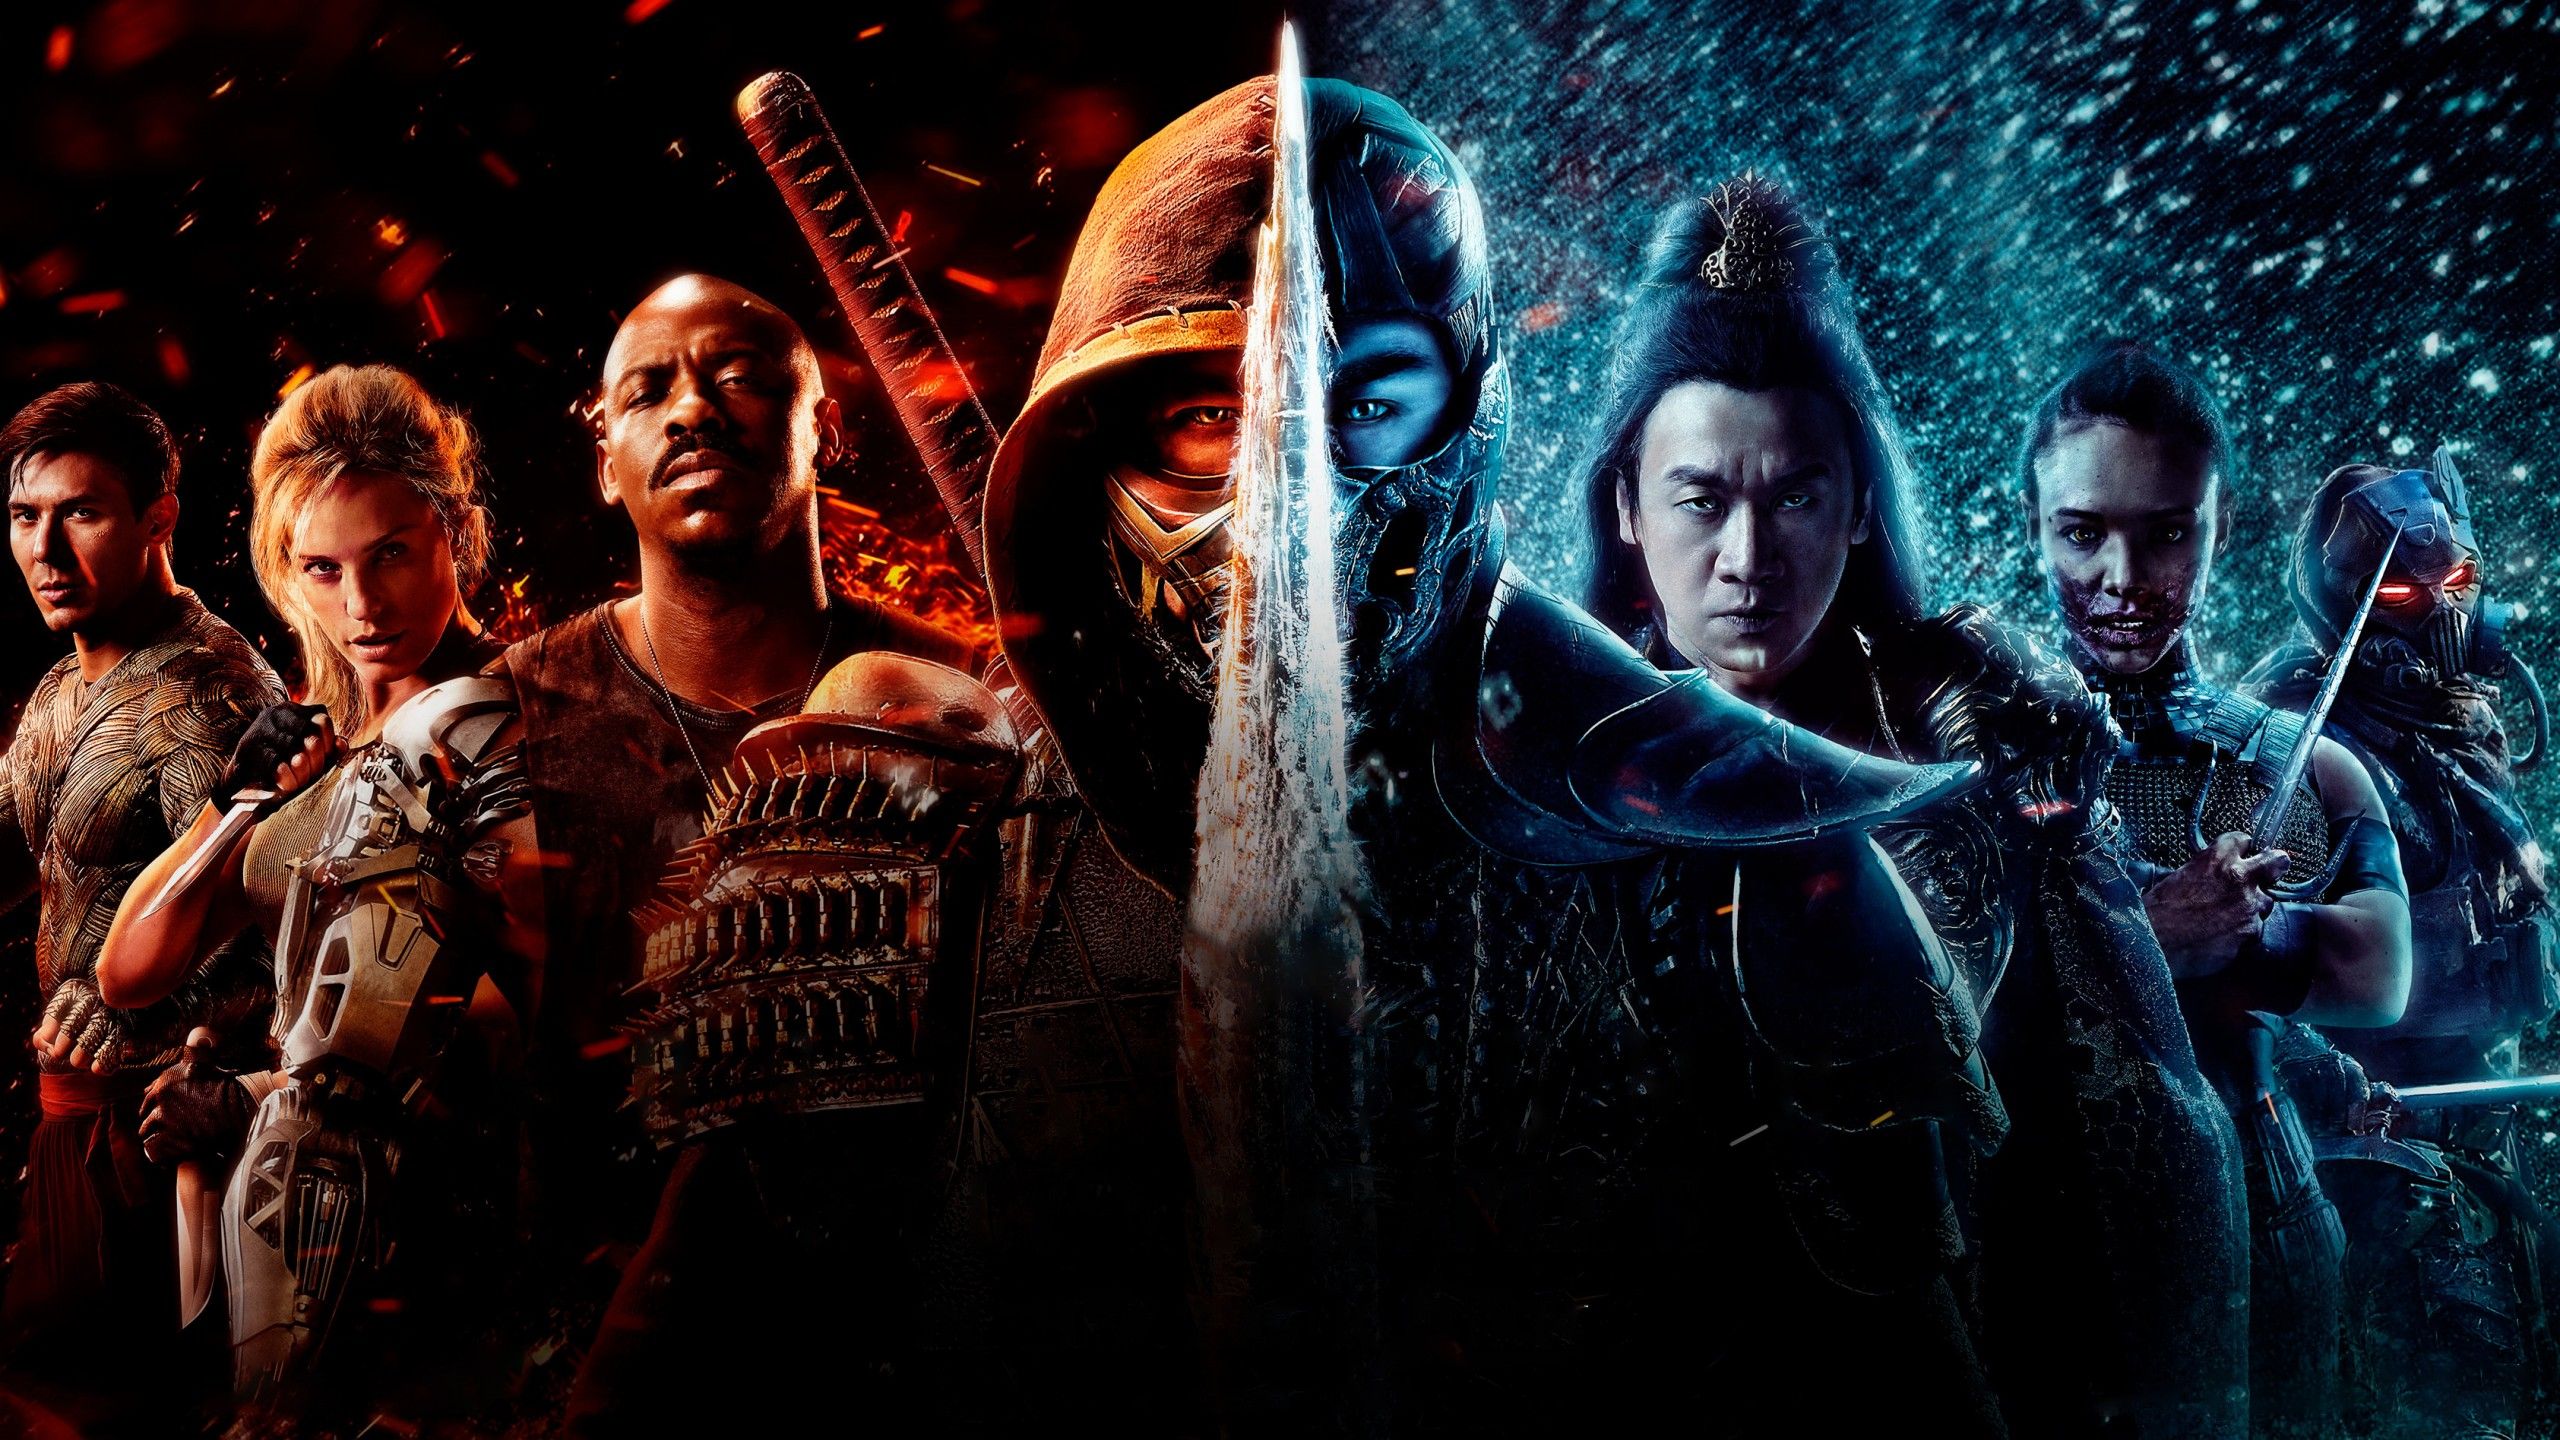 Mortal Kombat Wallpaper 4K, 2021 Movies, Poster